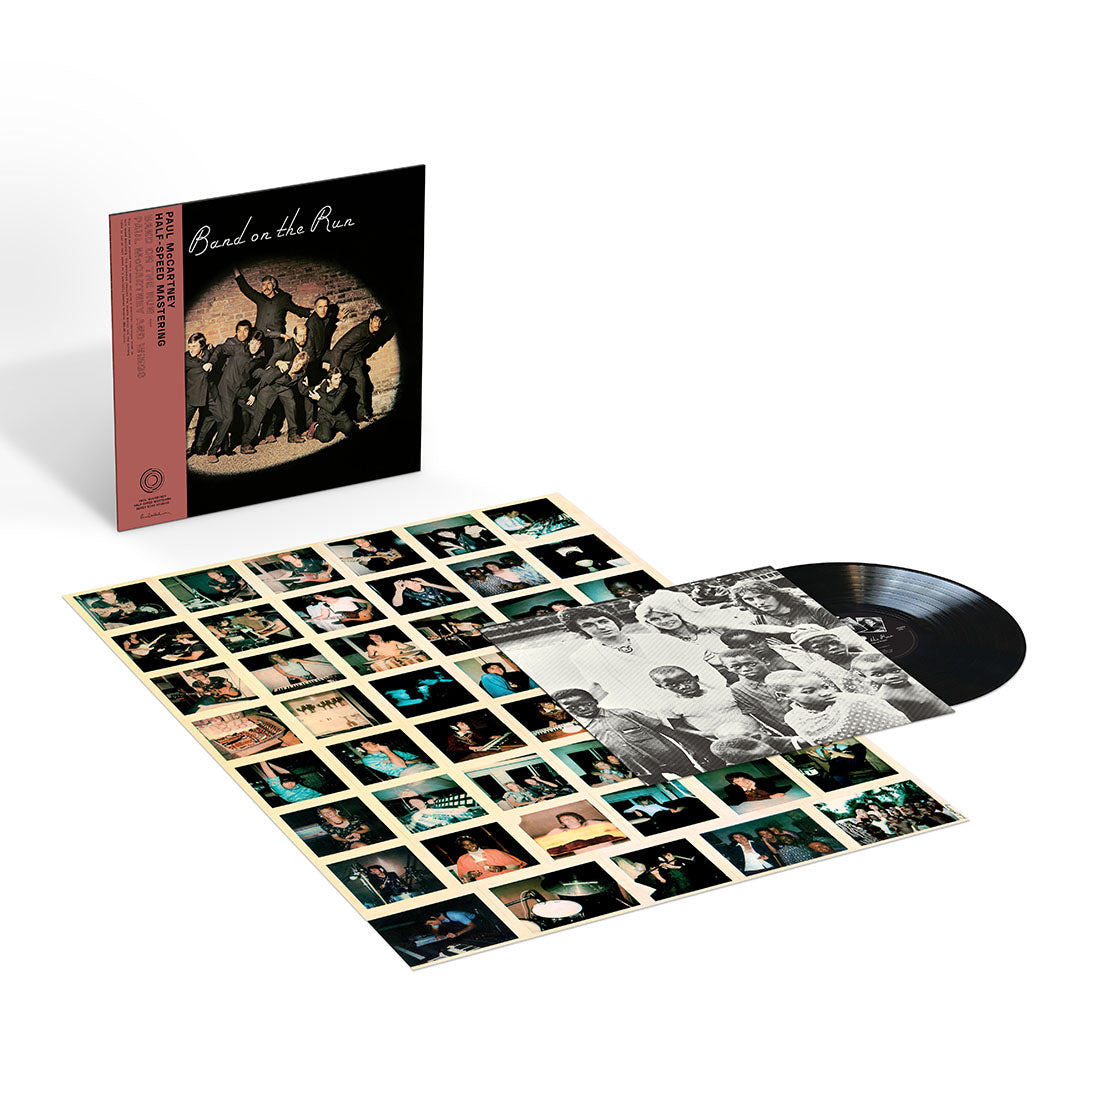 Paul McCartney & Wings - Band On the Run (50th Anniversary Edition): Vinyl LP